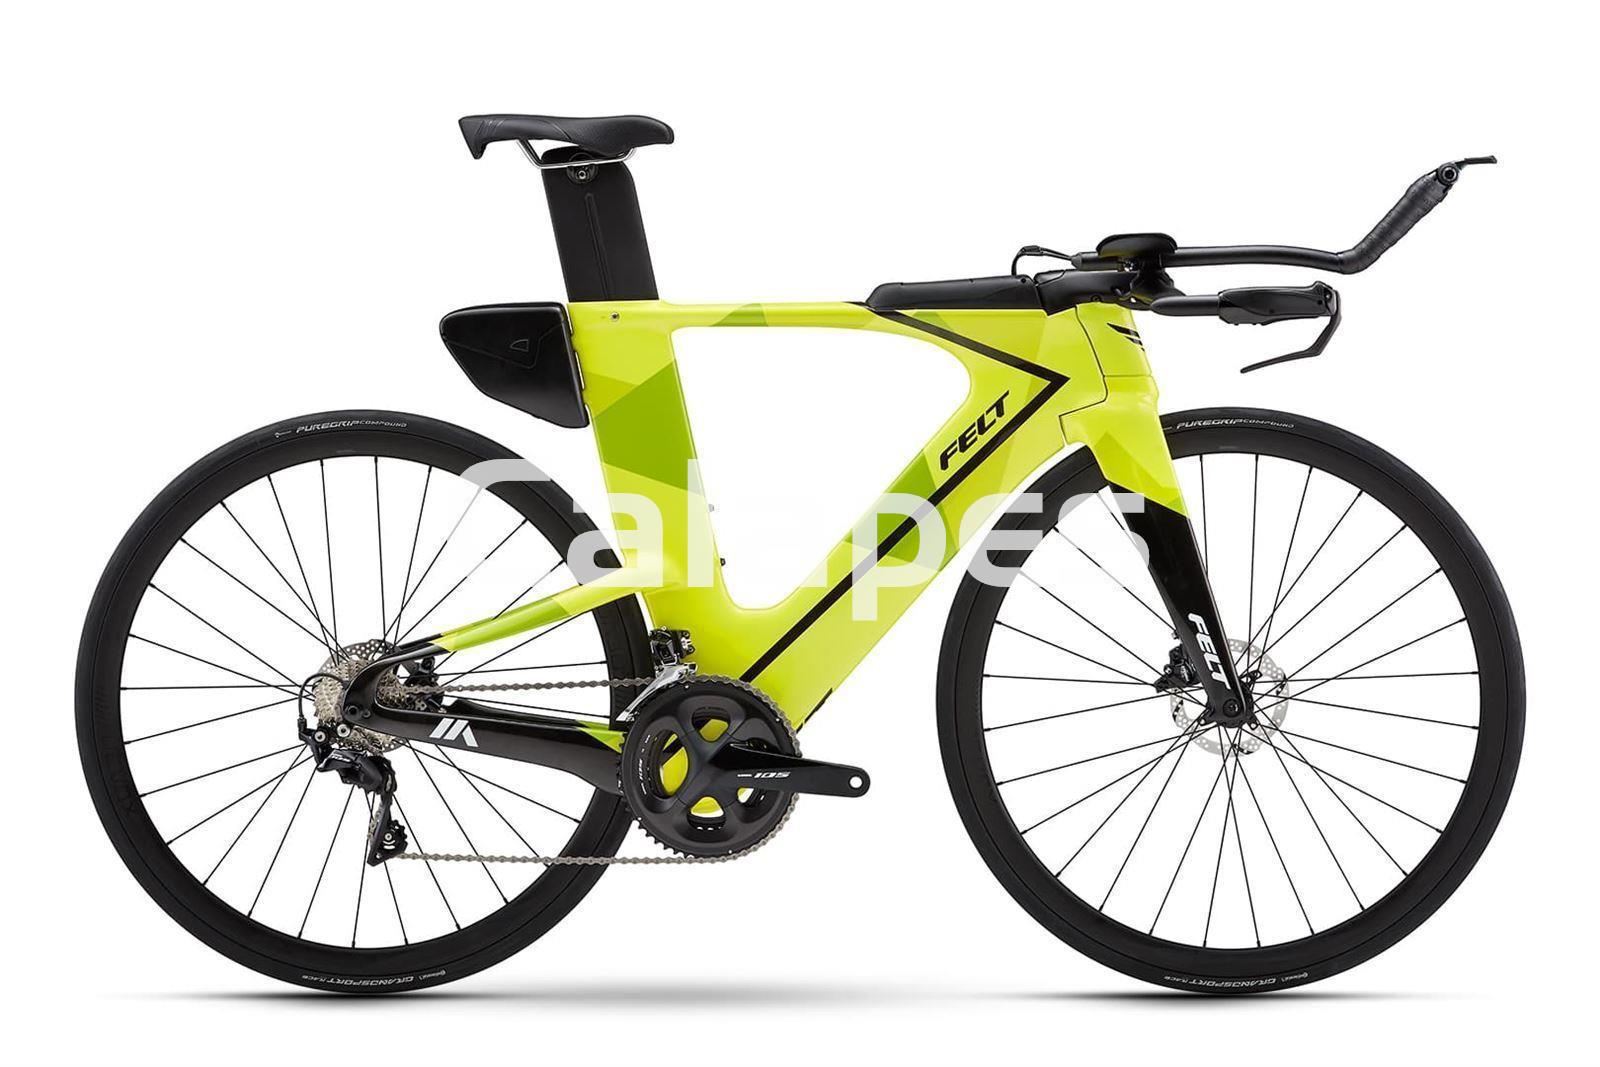 Bicicleta Triatlón Felt IA Advanced Shimano 105 11v - Imagen 1